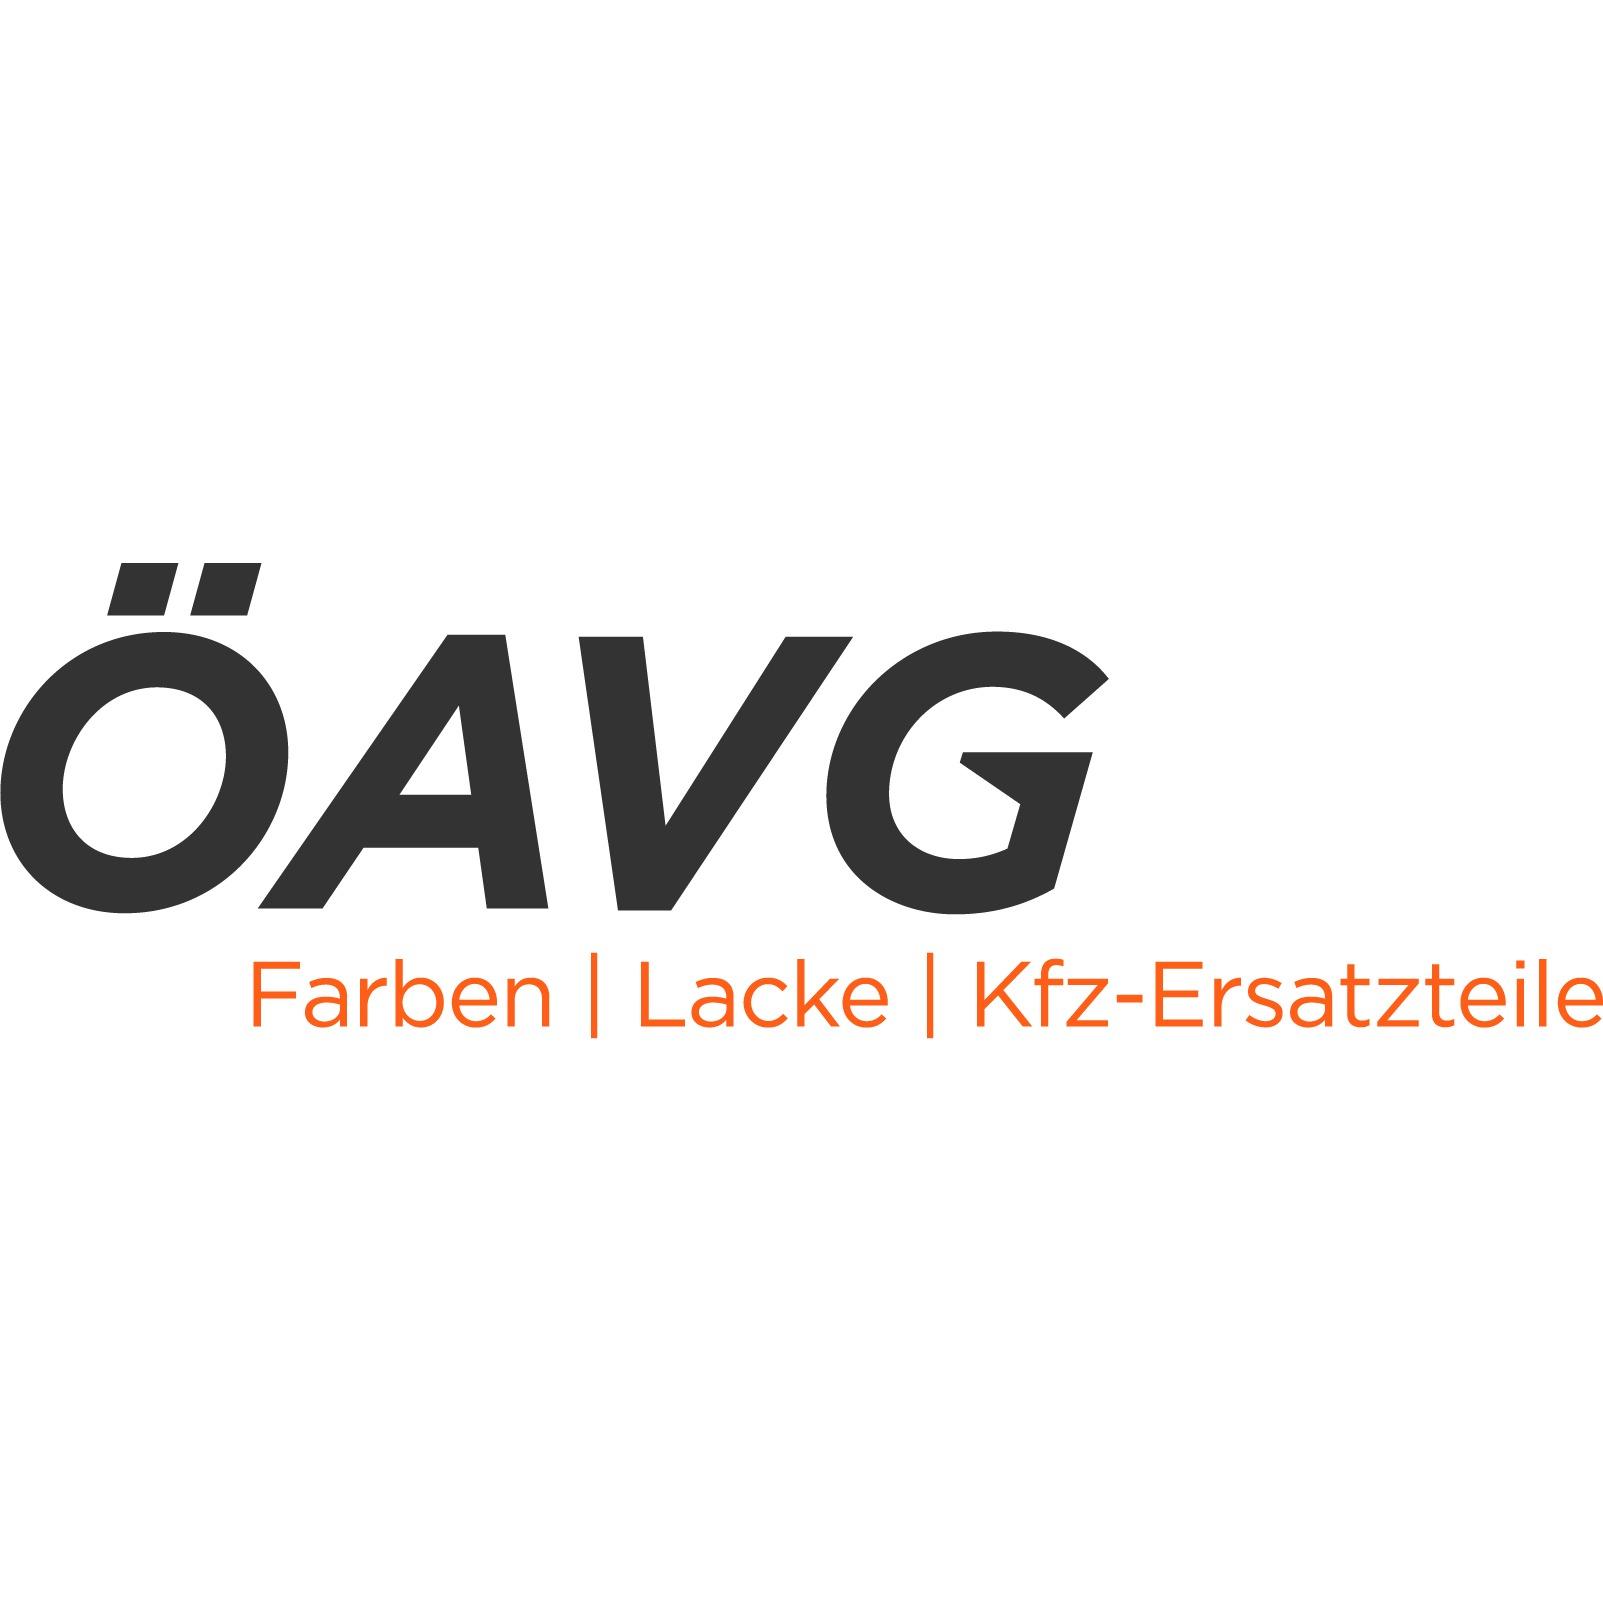 OAVG Farben | Lacke | Kfz-Ersatzteile - Car Accessories Store - Wels - 07242 42065 Austria | ShowMeLocal.com